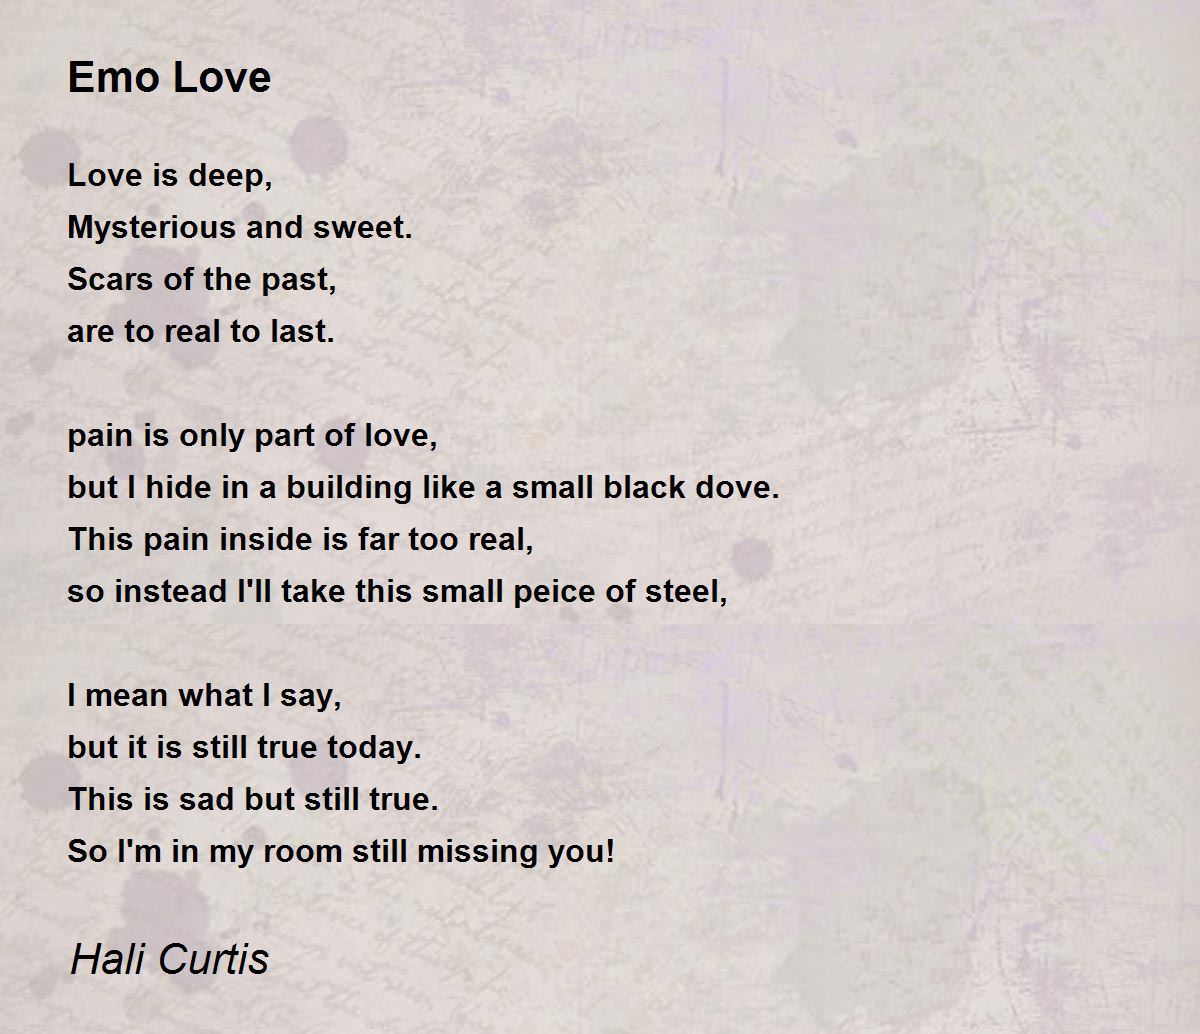  Emo  Love  by Hali Curtis Emo  Love  Poem 